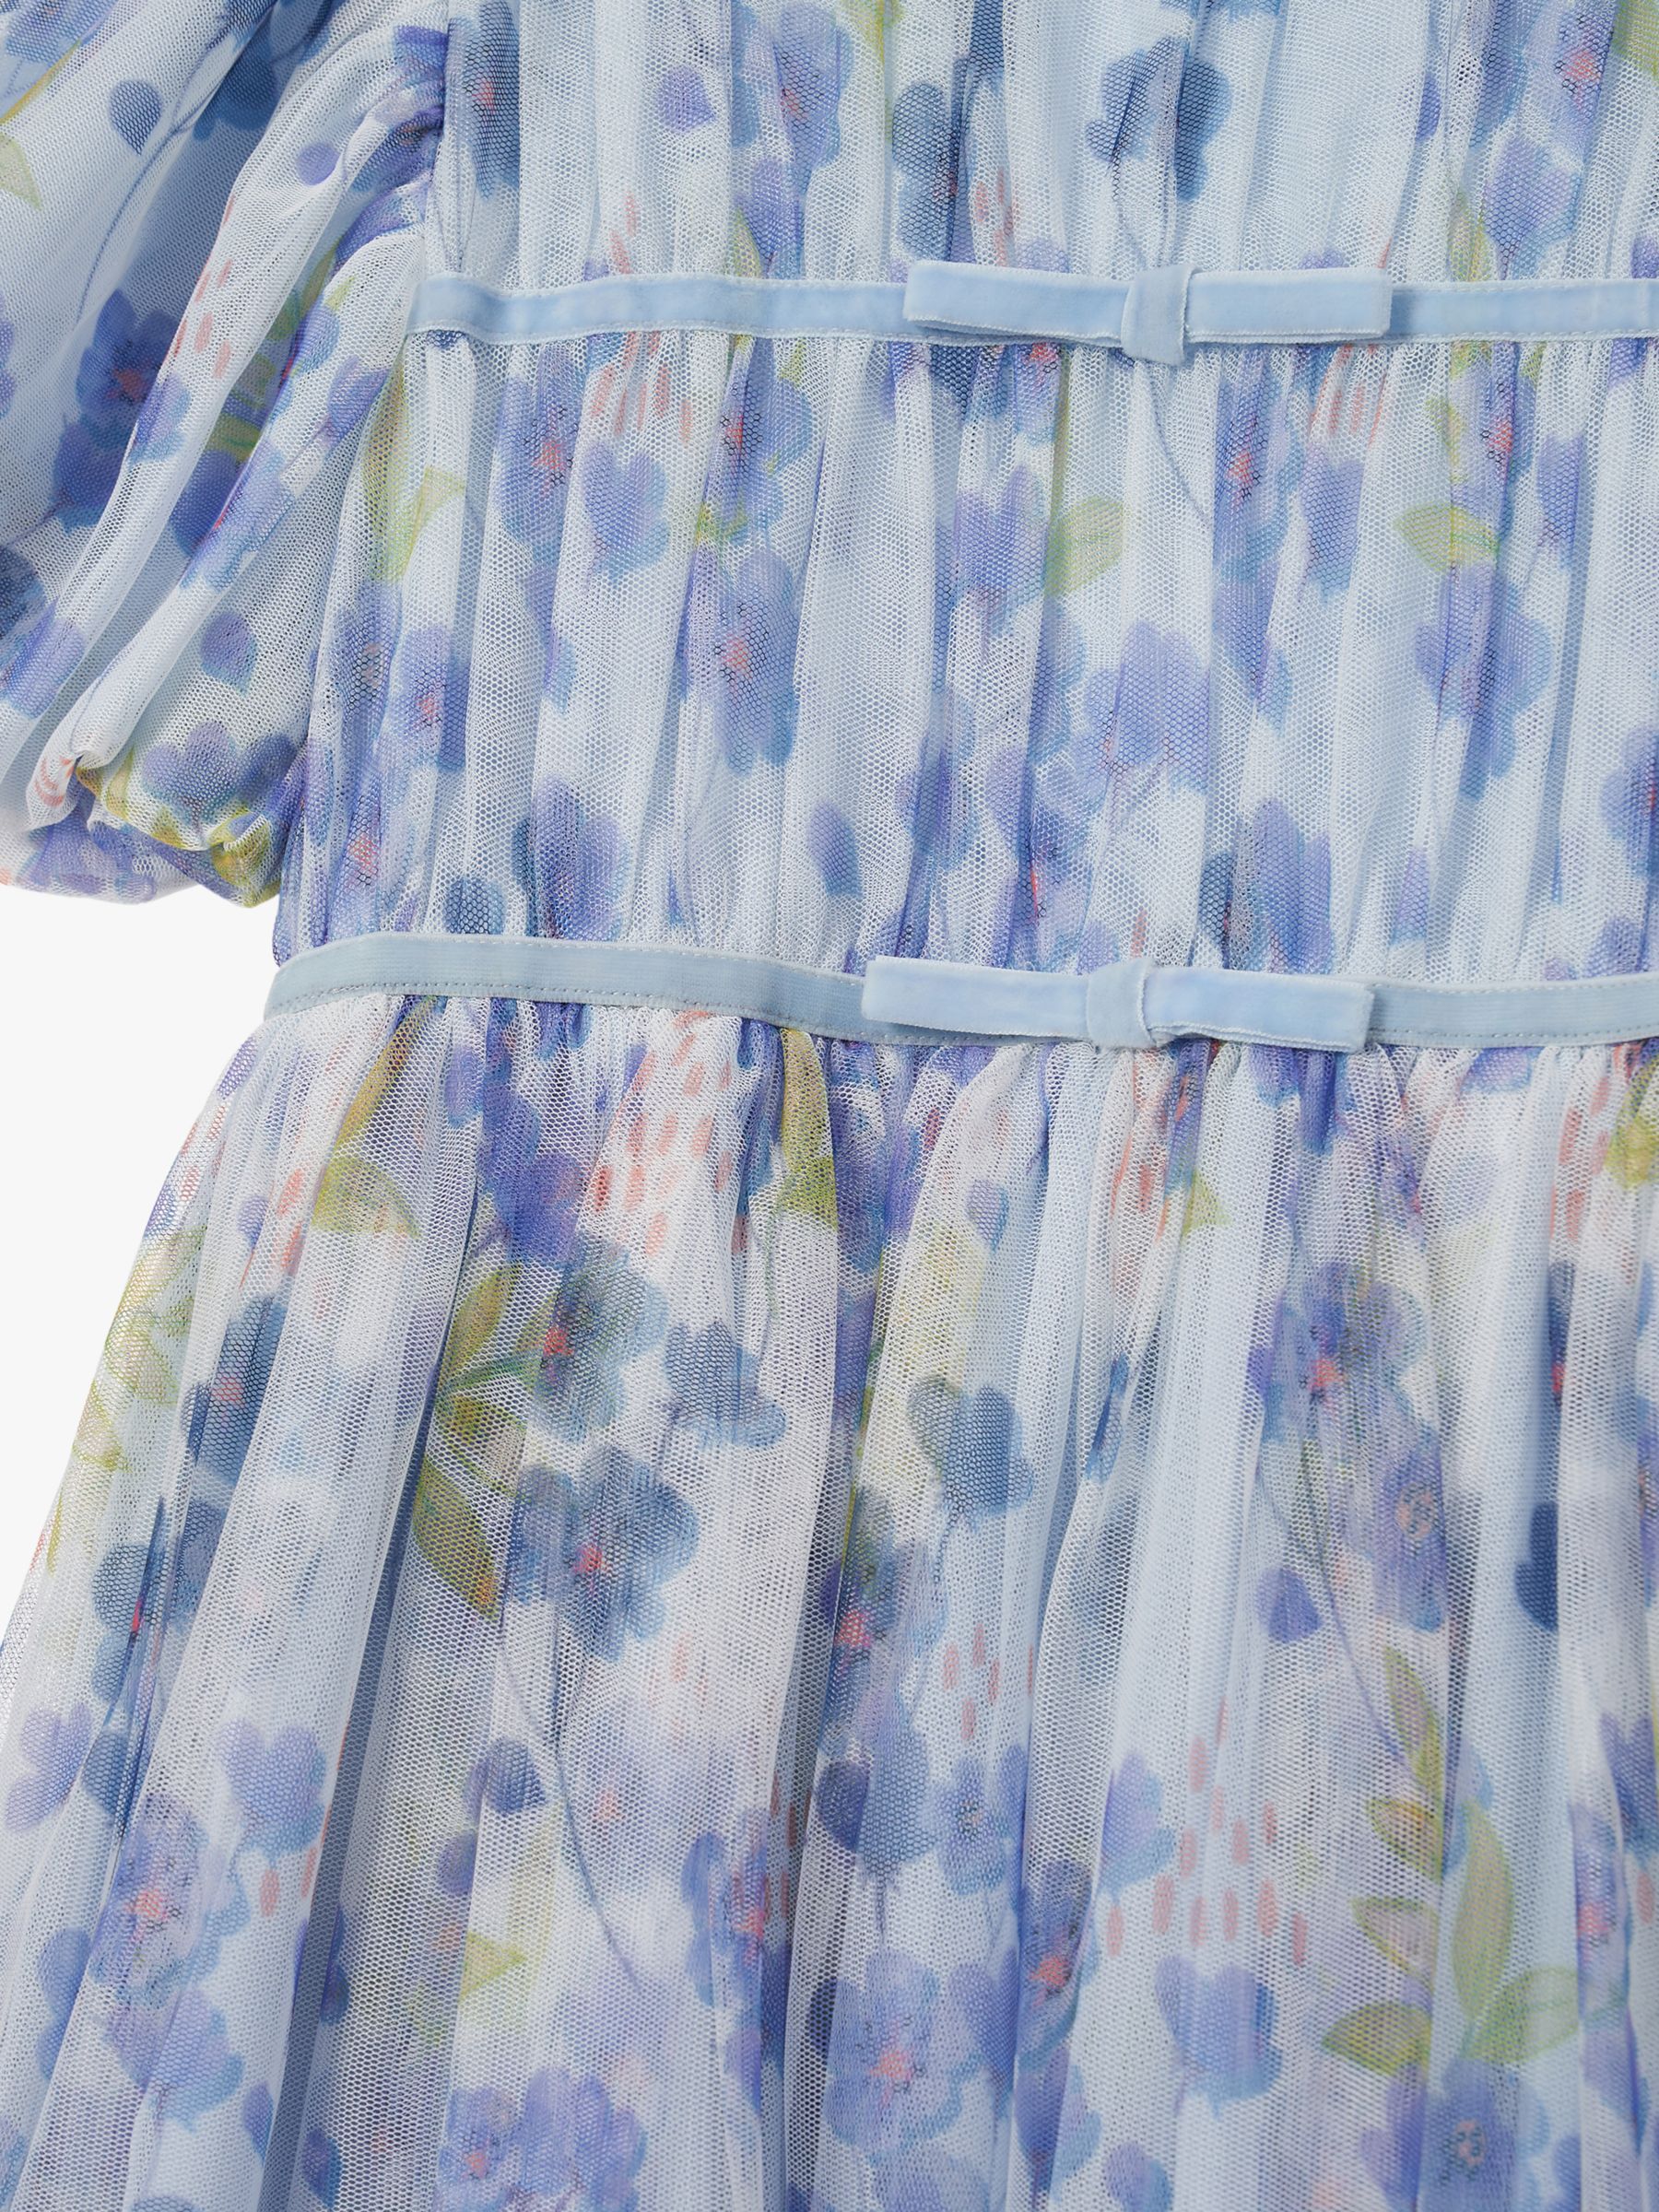 Angel & Rocket Kids' Mina Floral Print Mesh Dress, Blue/Multi, 10 years